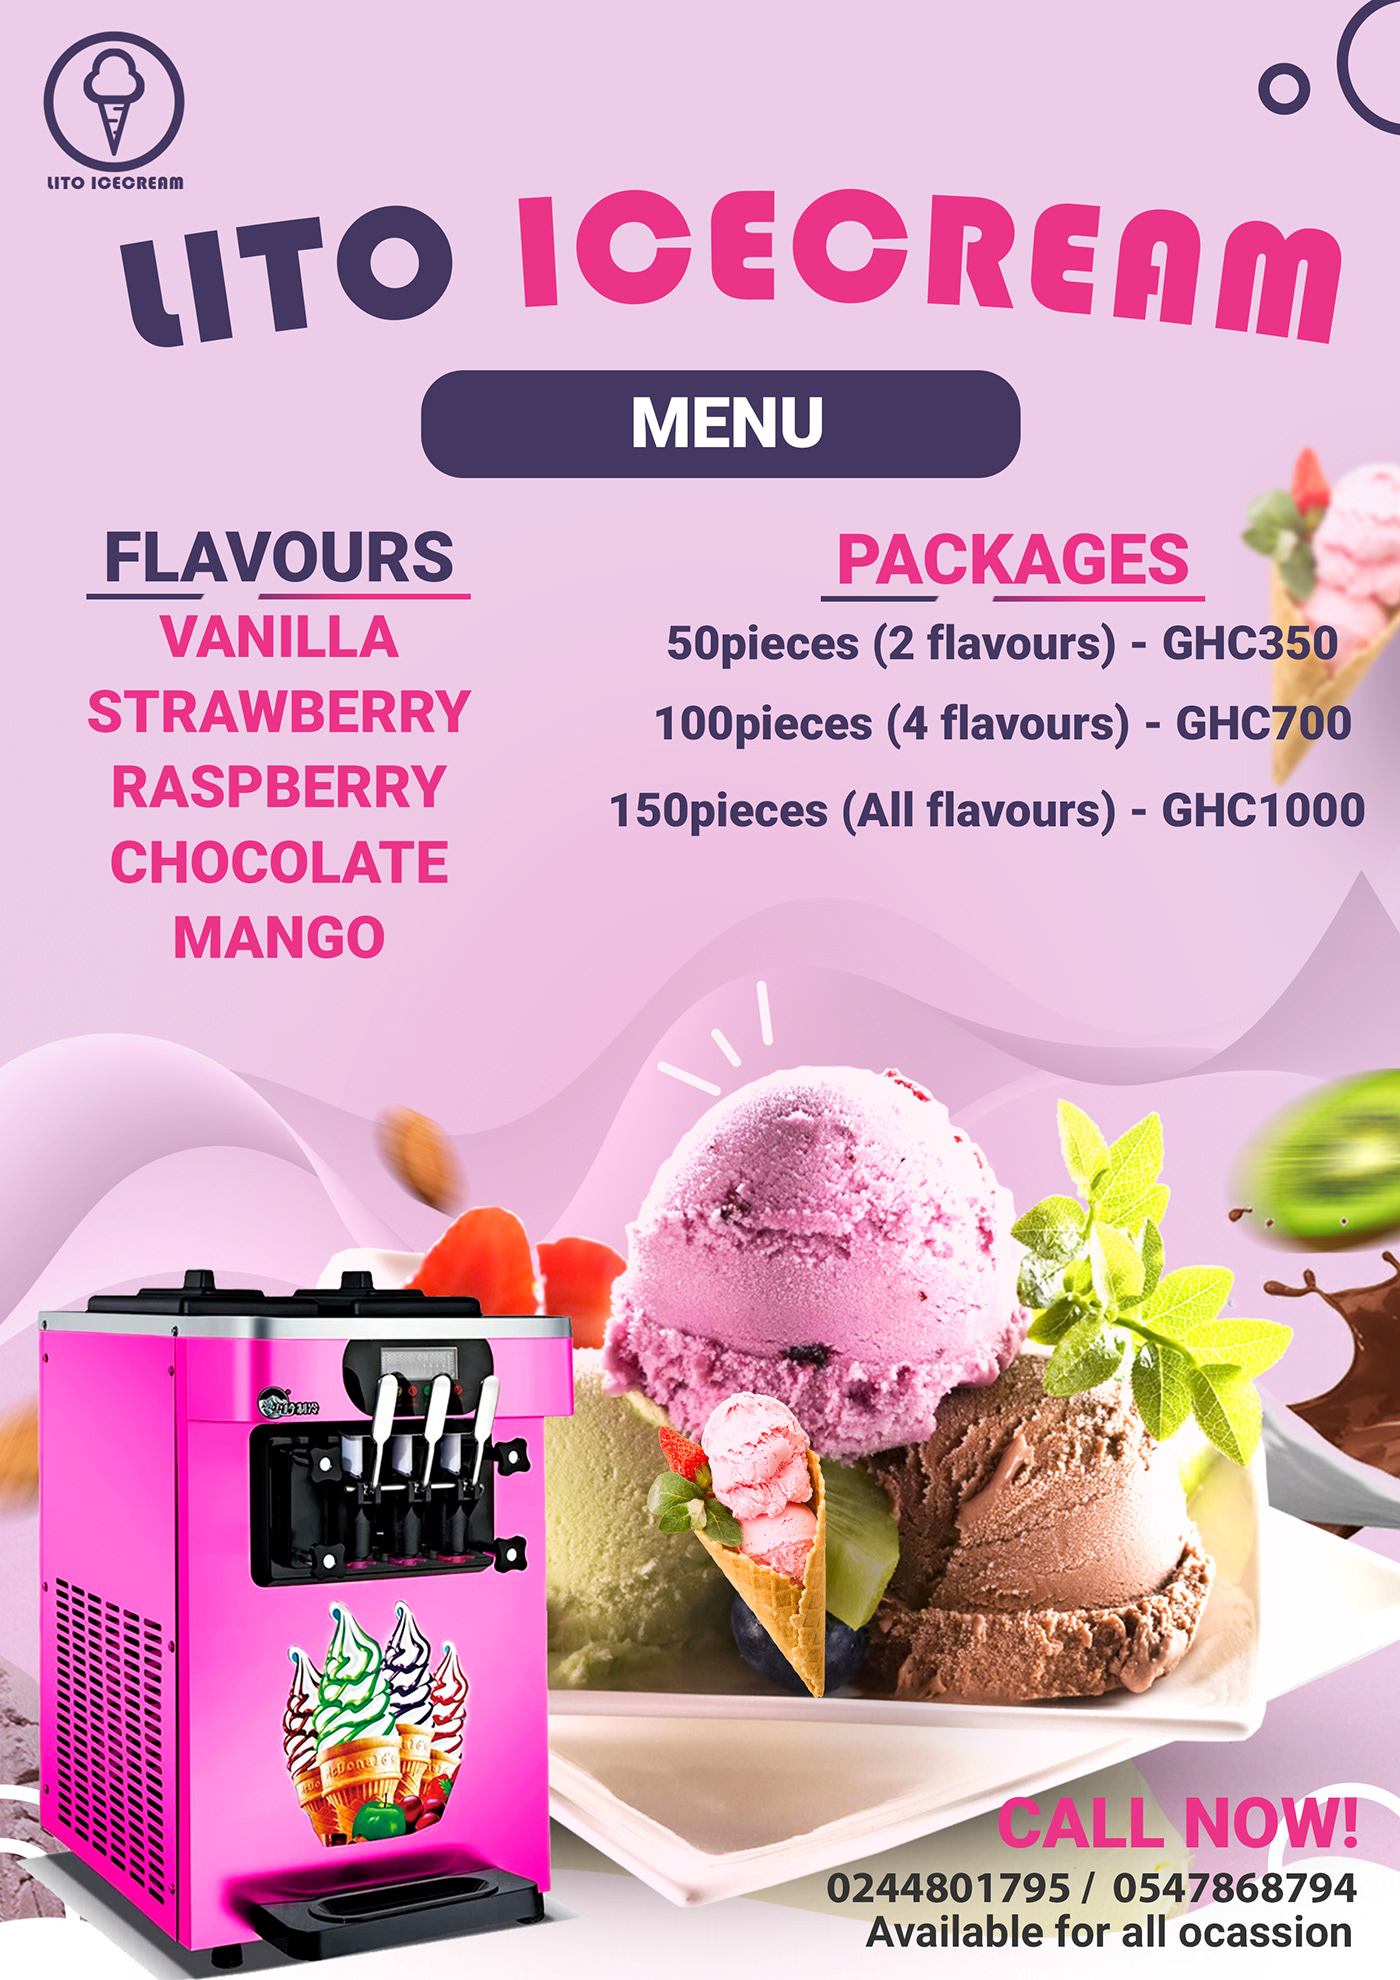 ads Advertising  brand identity design Food  icecream Logo Design marketing   Social media post Socialmedia